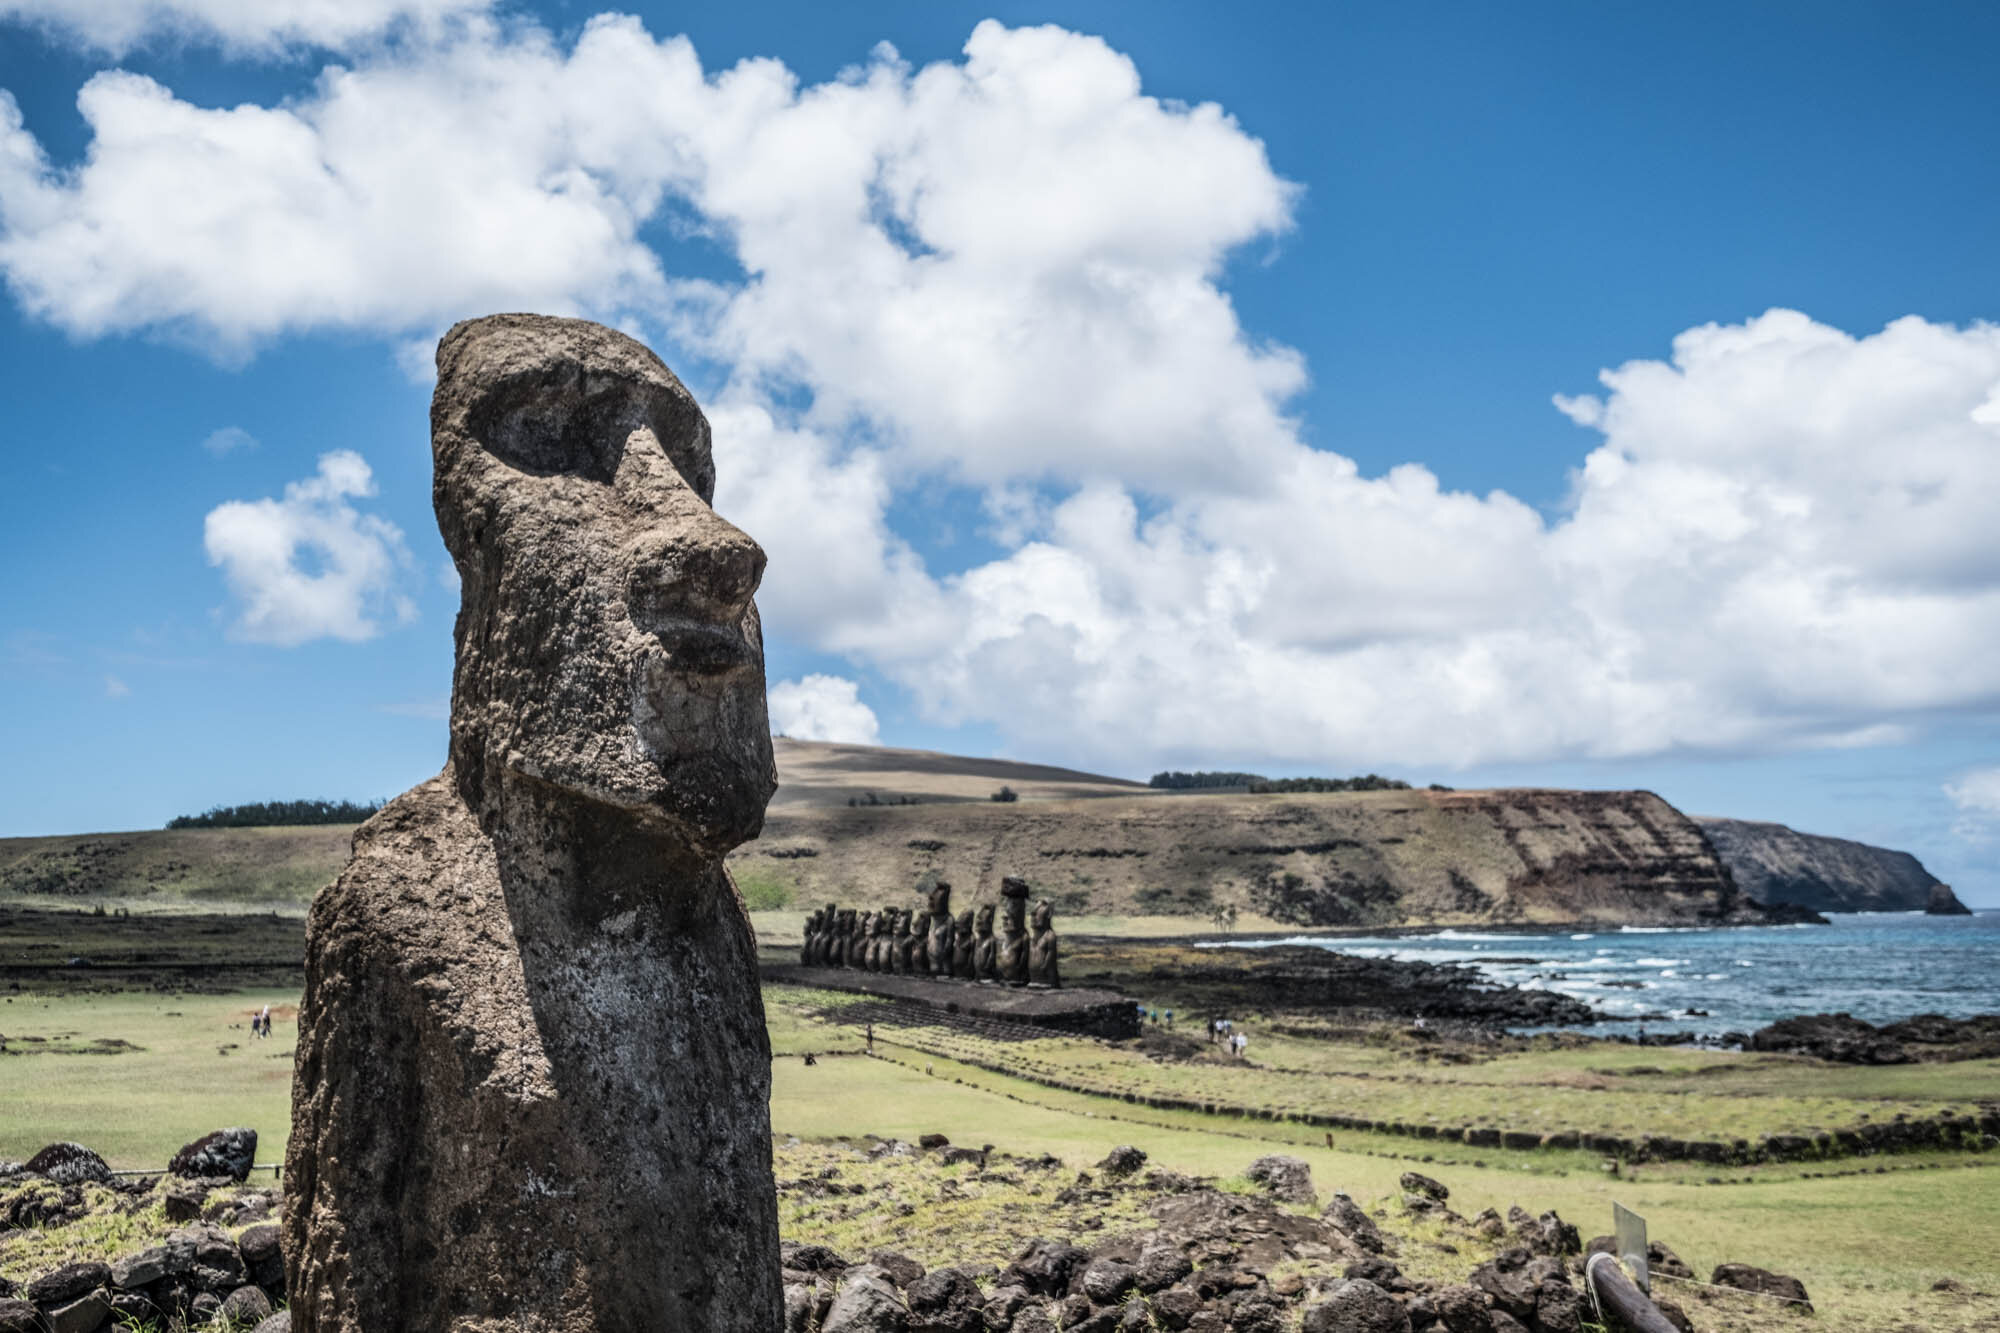  Moai at the Tongariki site 